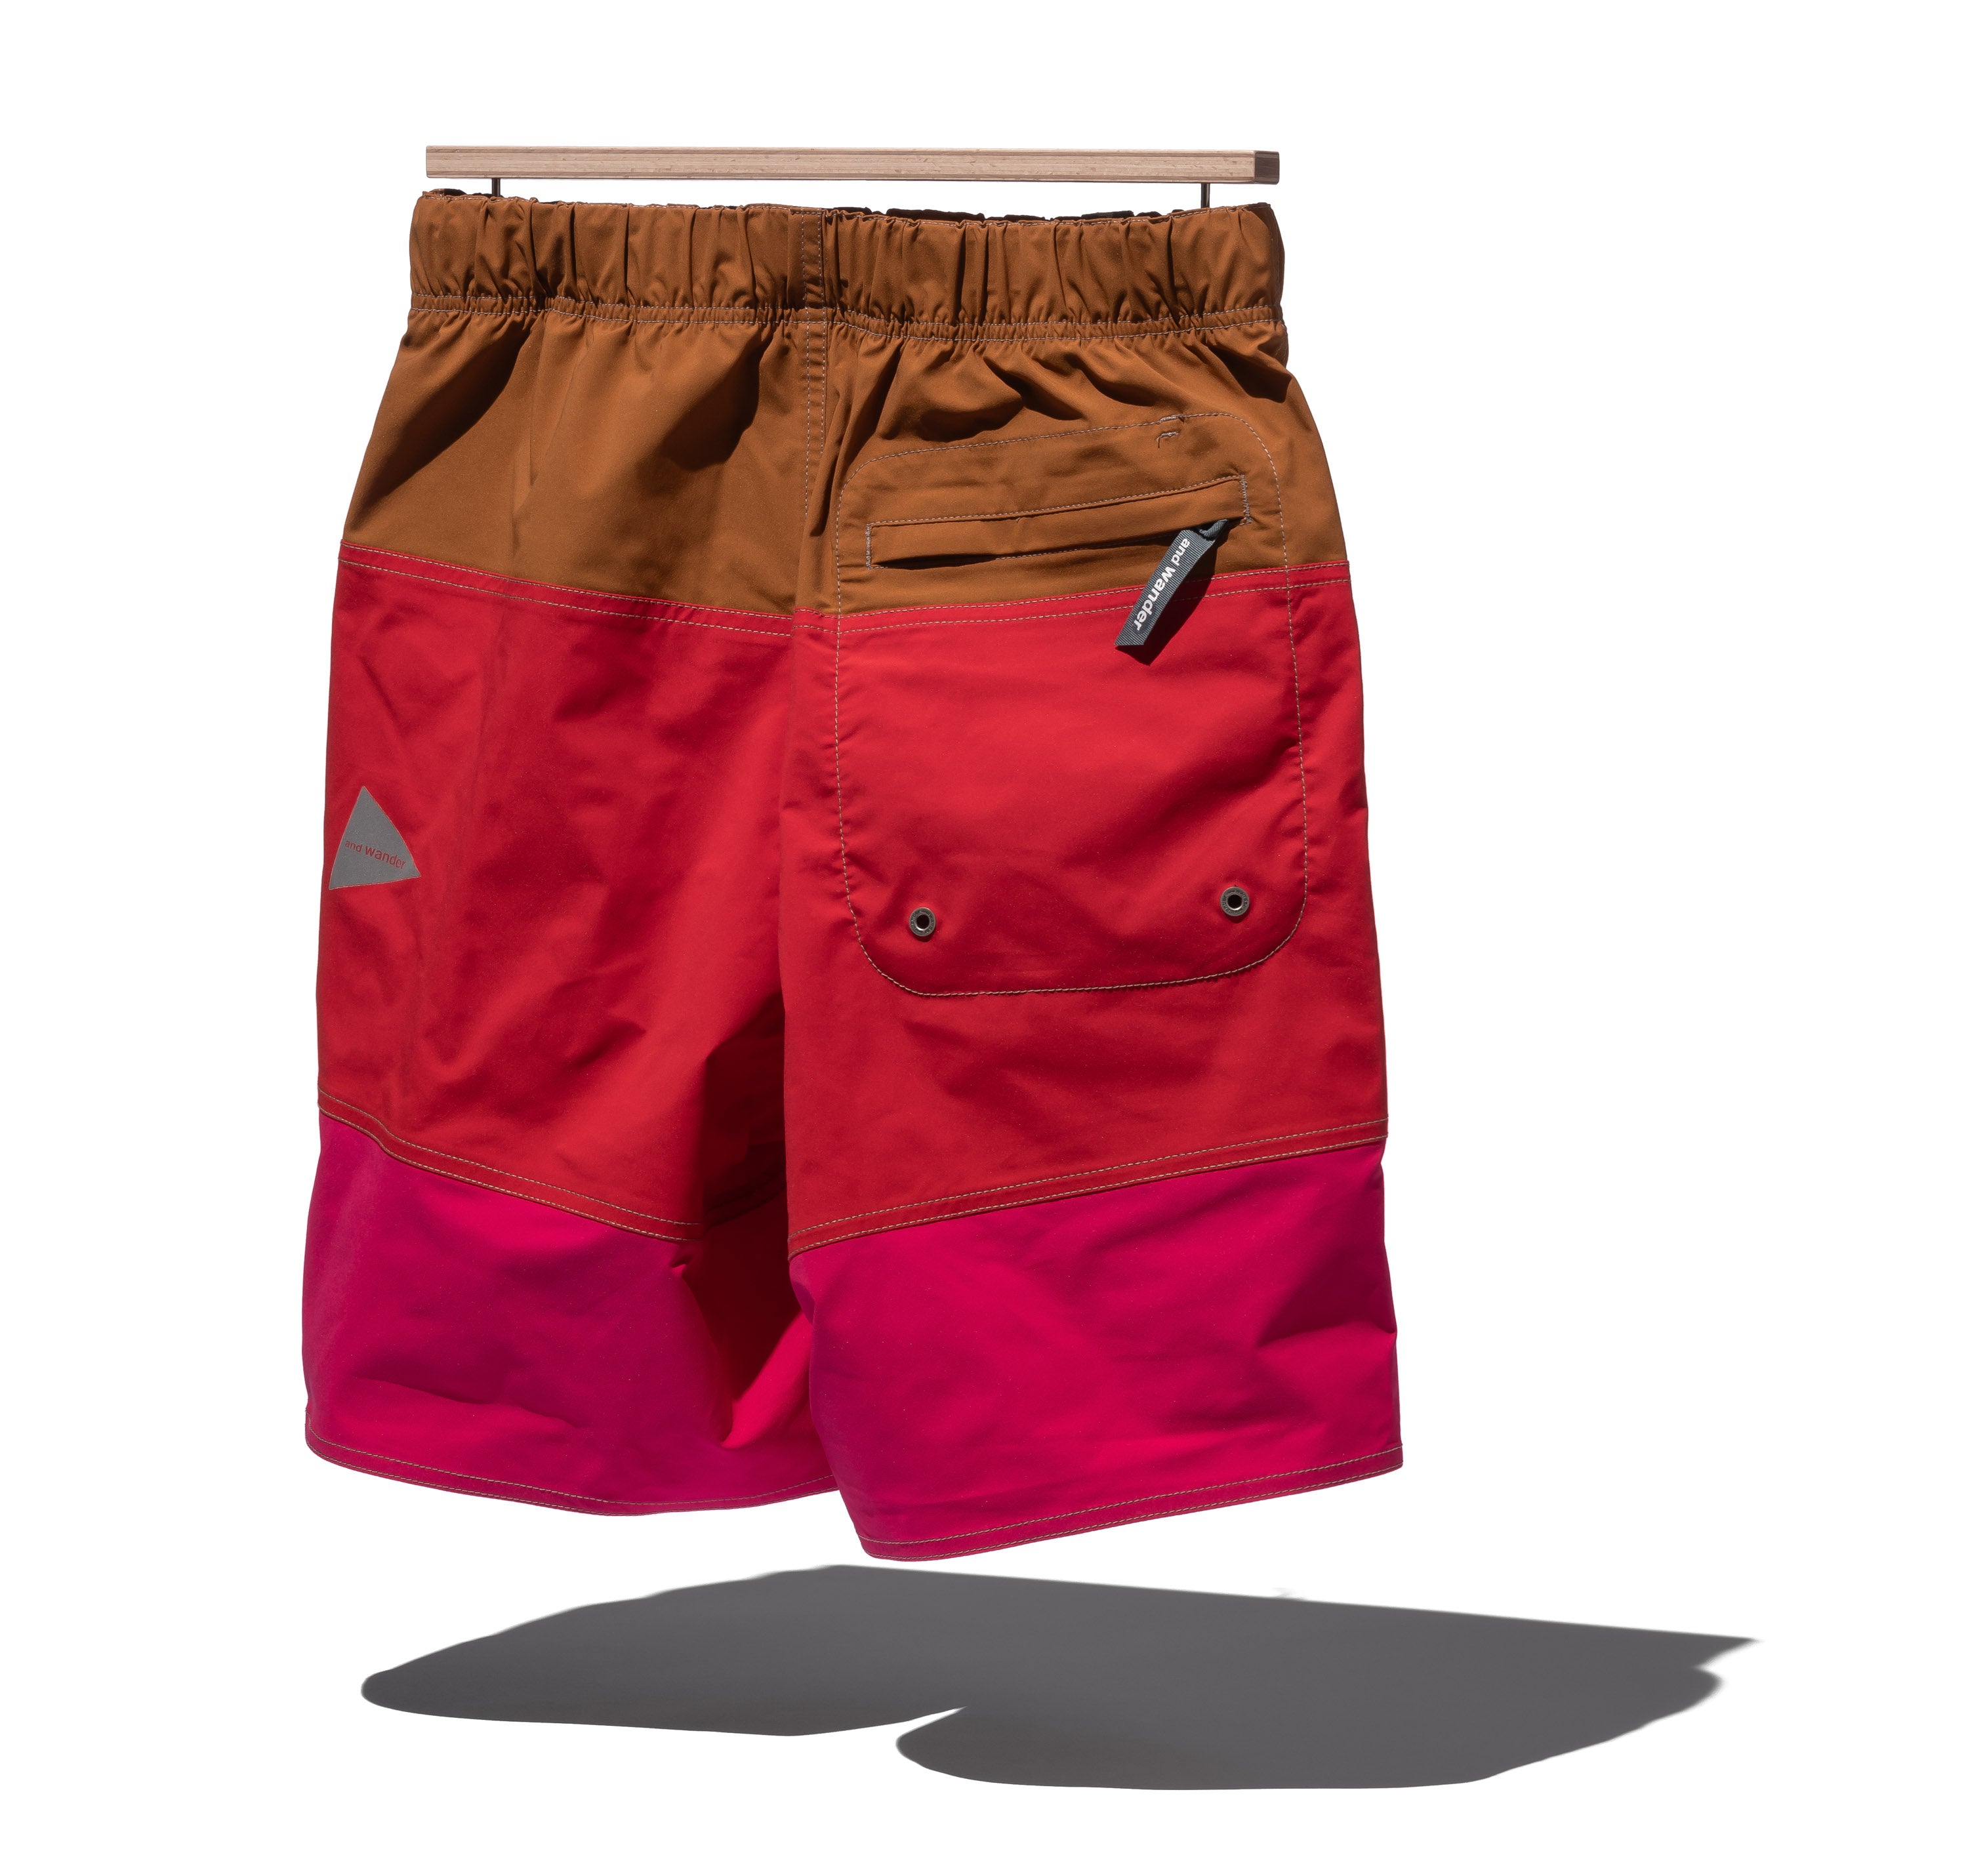 Wave shorts